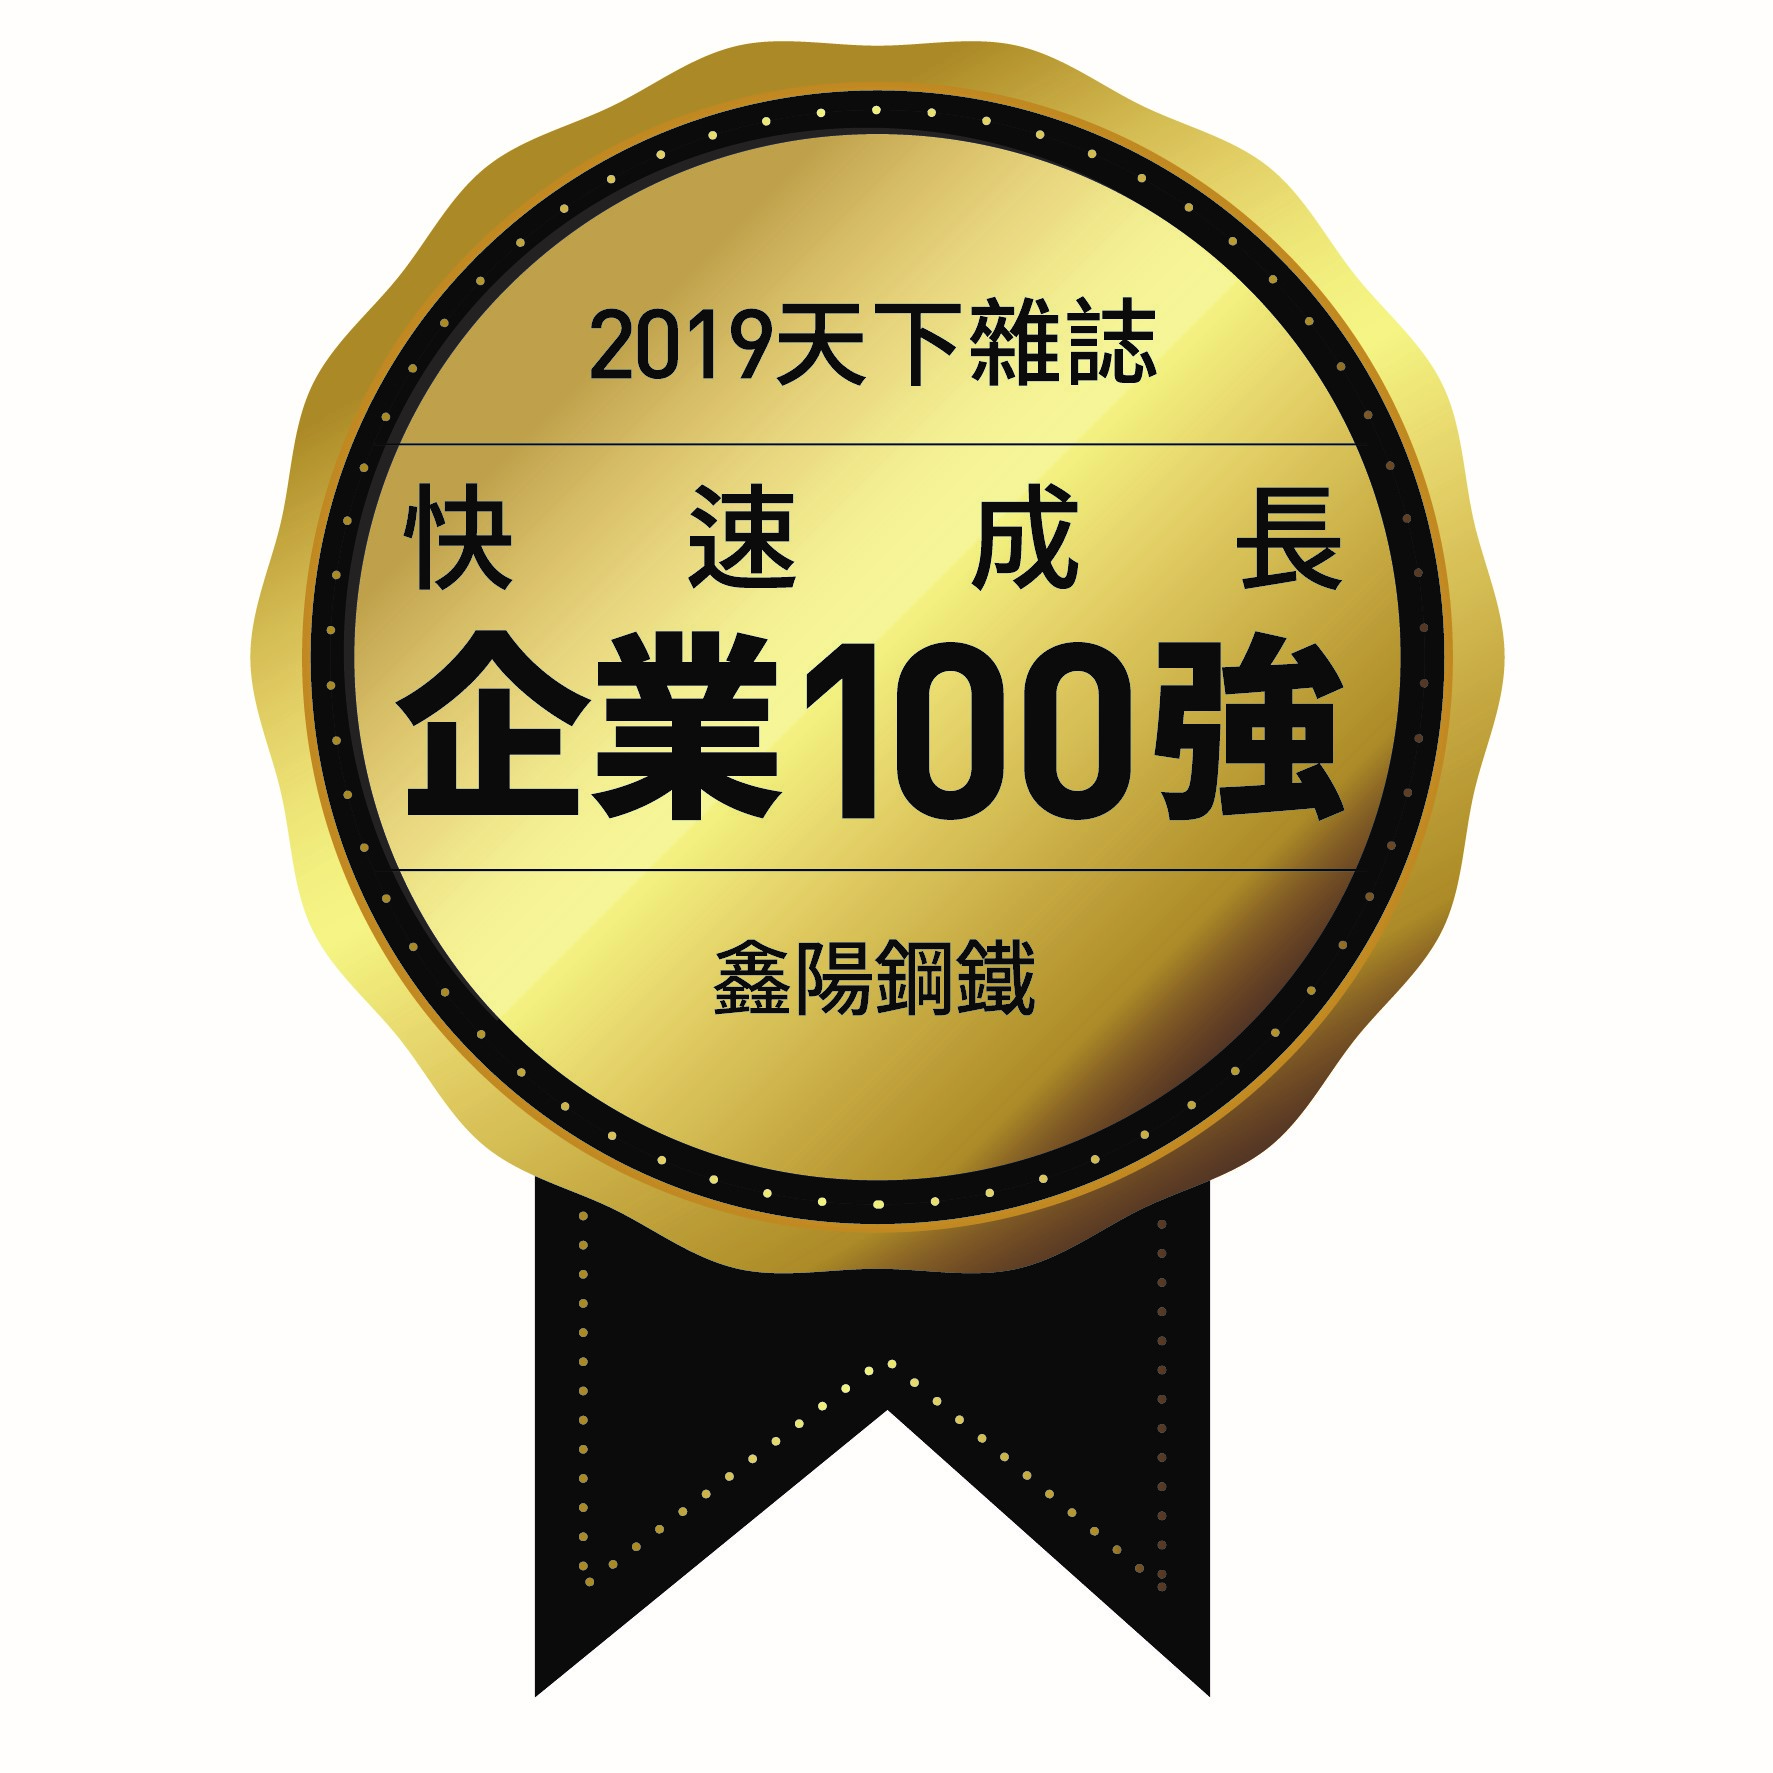 Fast 100 Enterprises of Taiwan